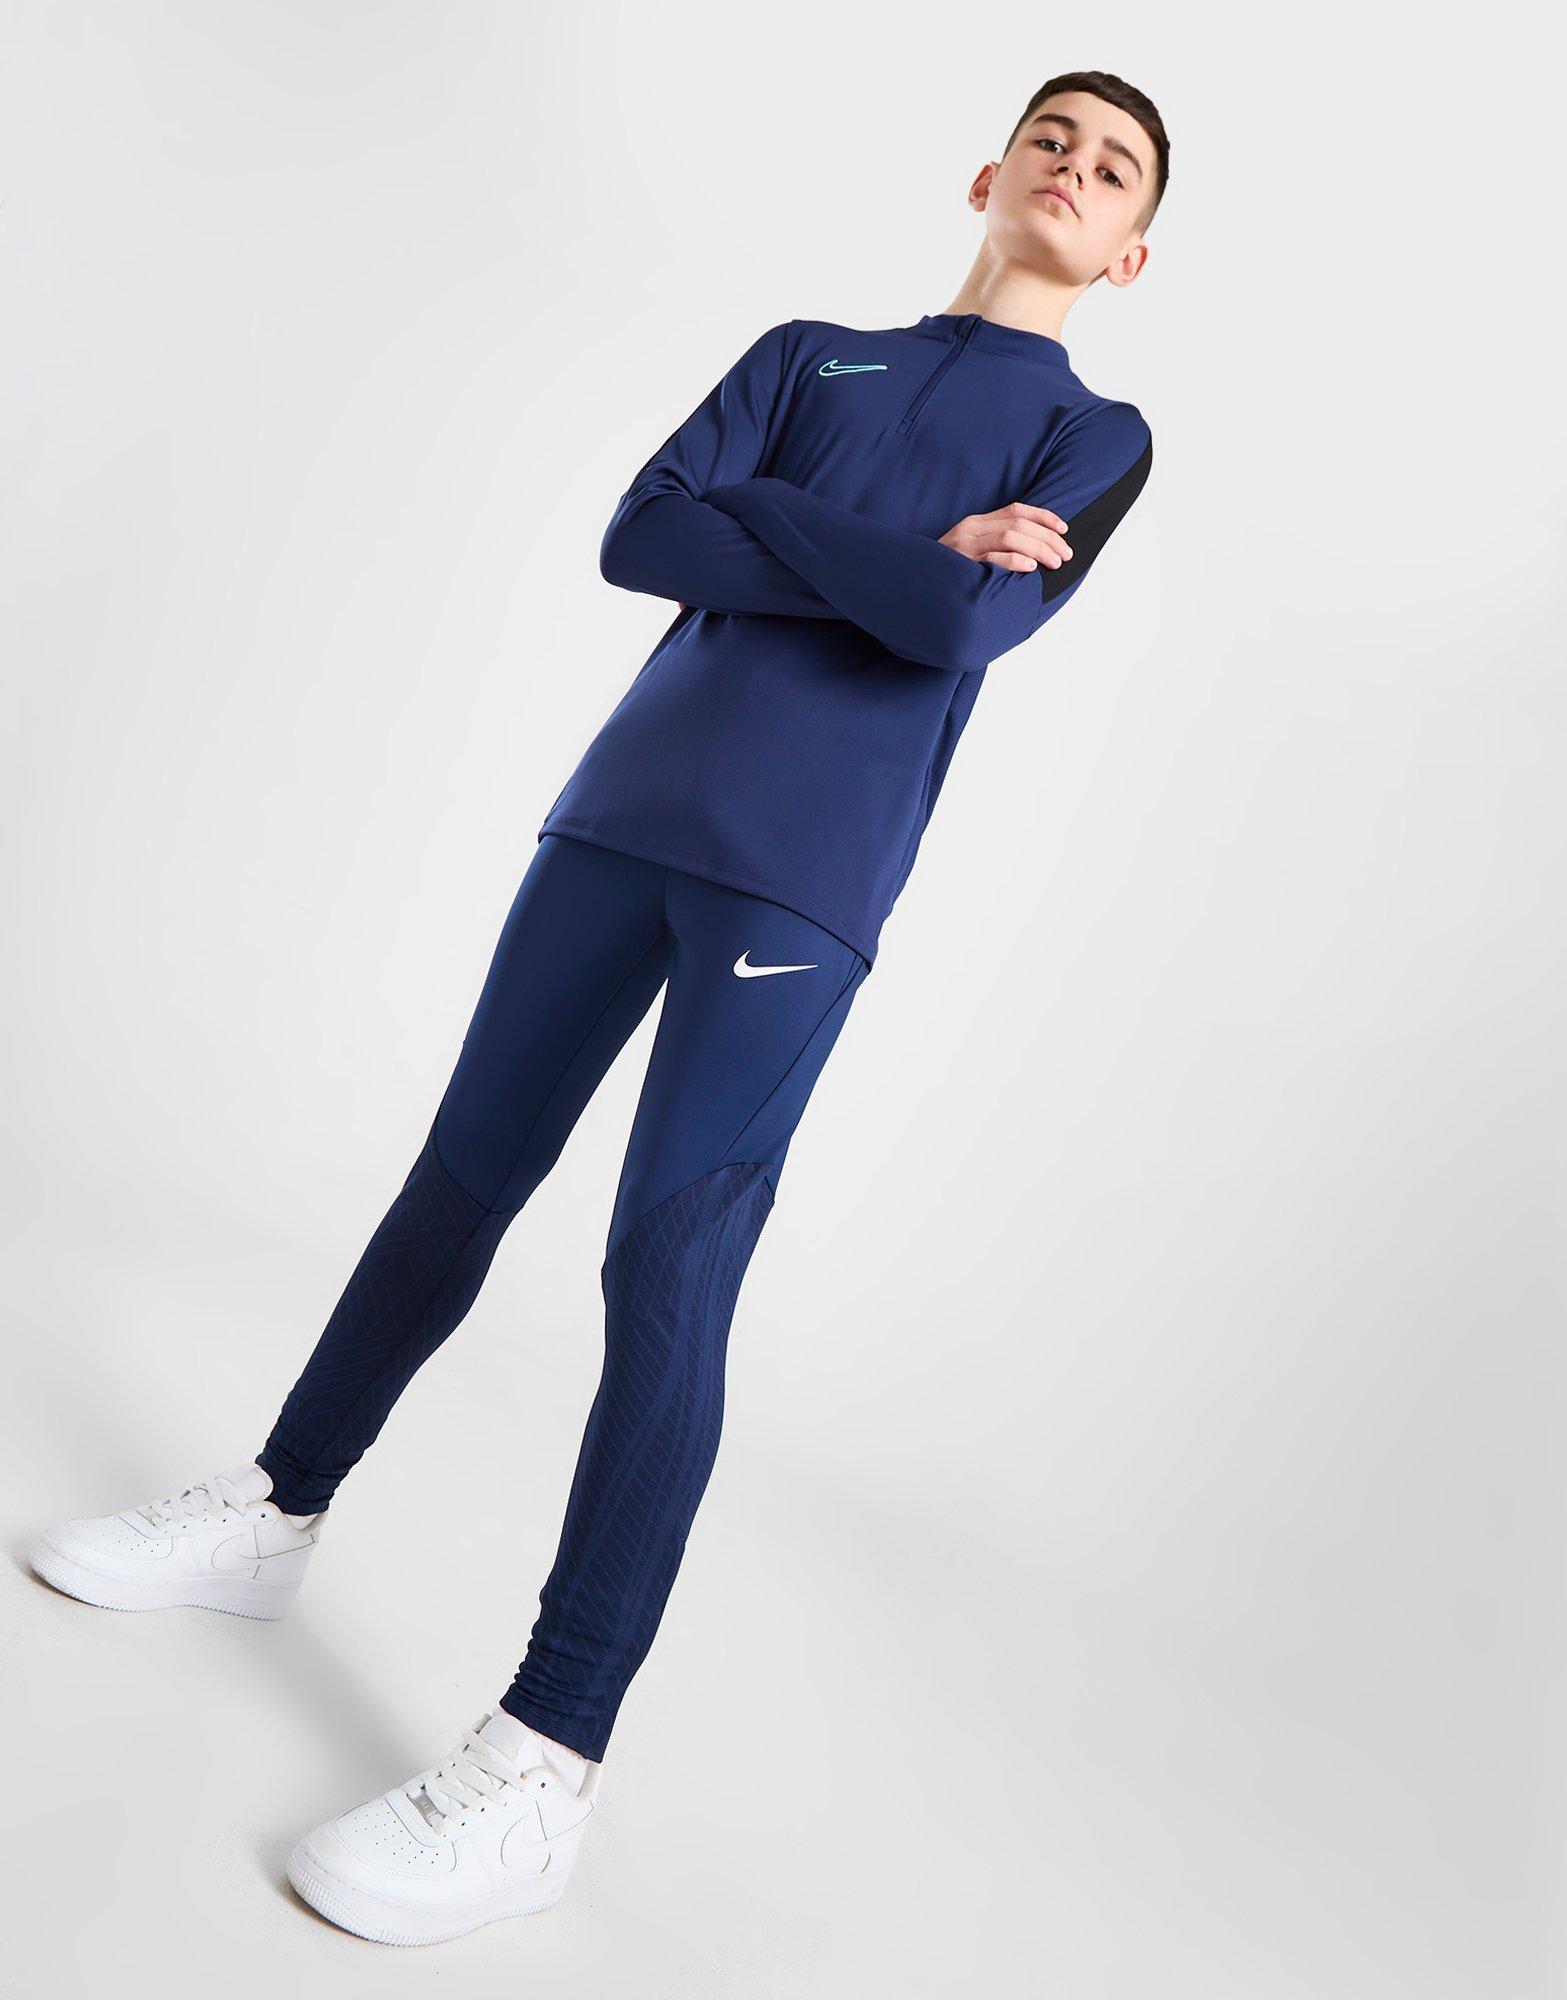 Nike Dri Fit Windbreaker Athletic Capri Pants Size M (8-10)